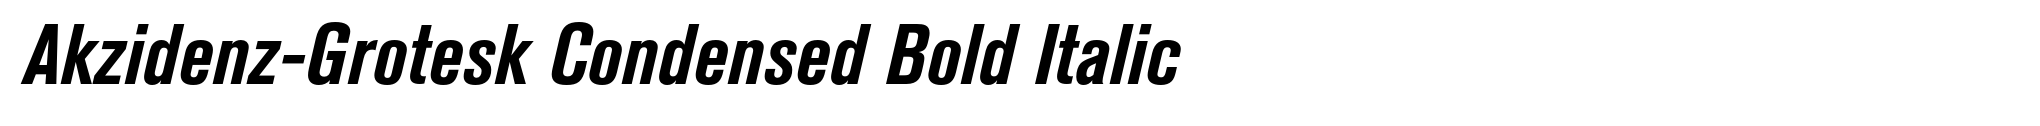 Akzidenz-Grotesk Condensed Bold Italic image